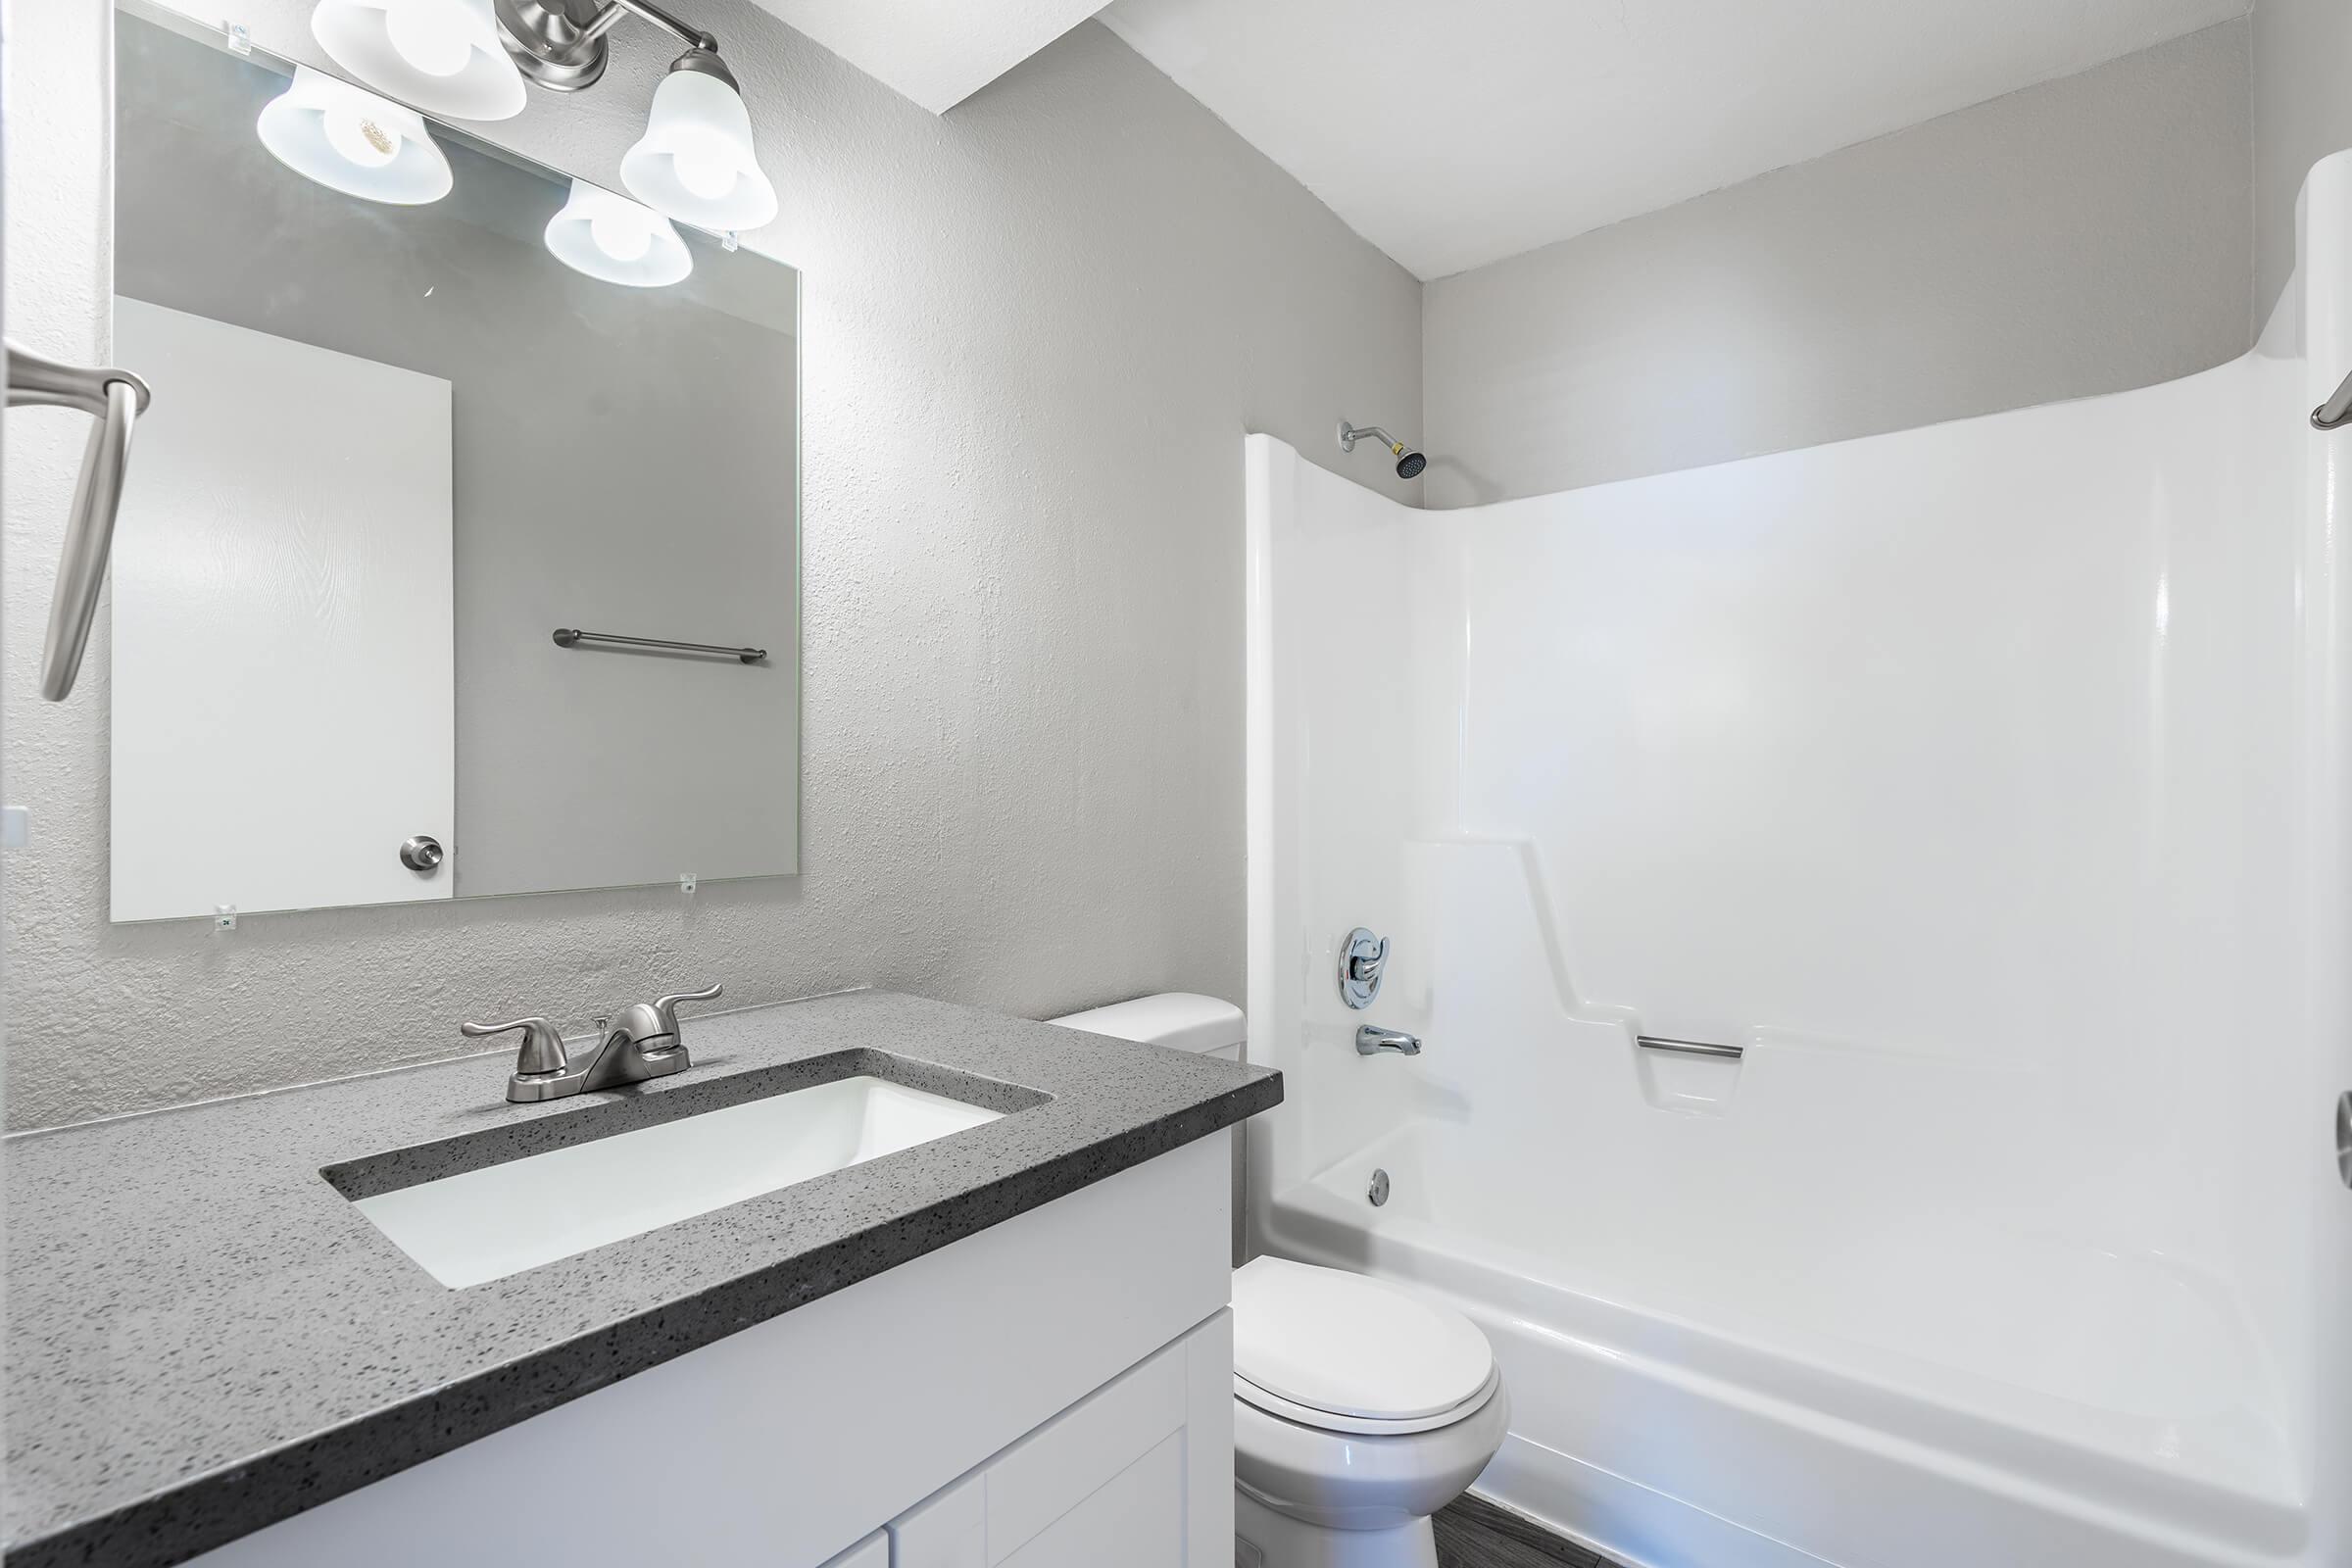 Renovated bathroom with large shower, toilet, and granite vanity sink countertop